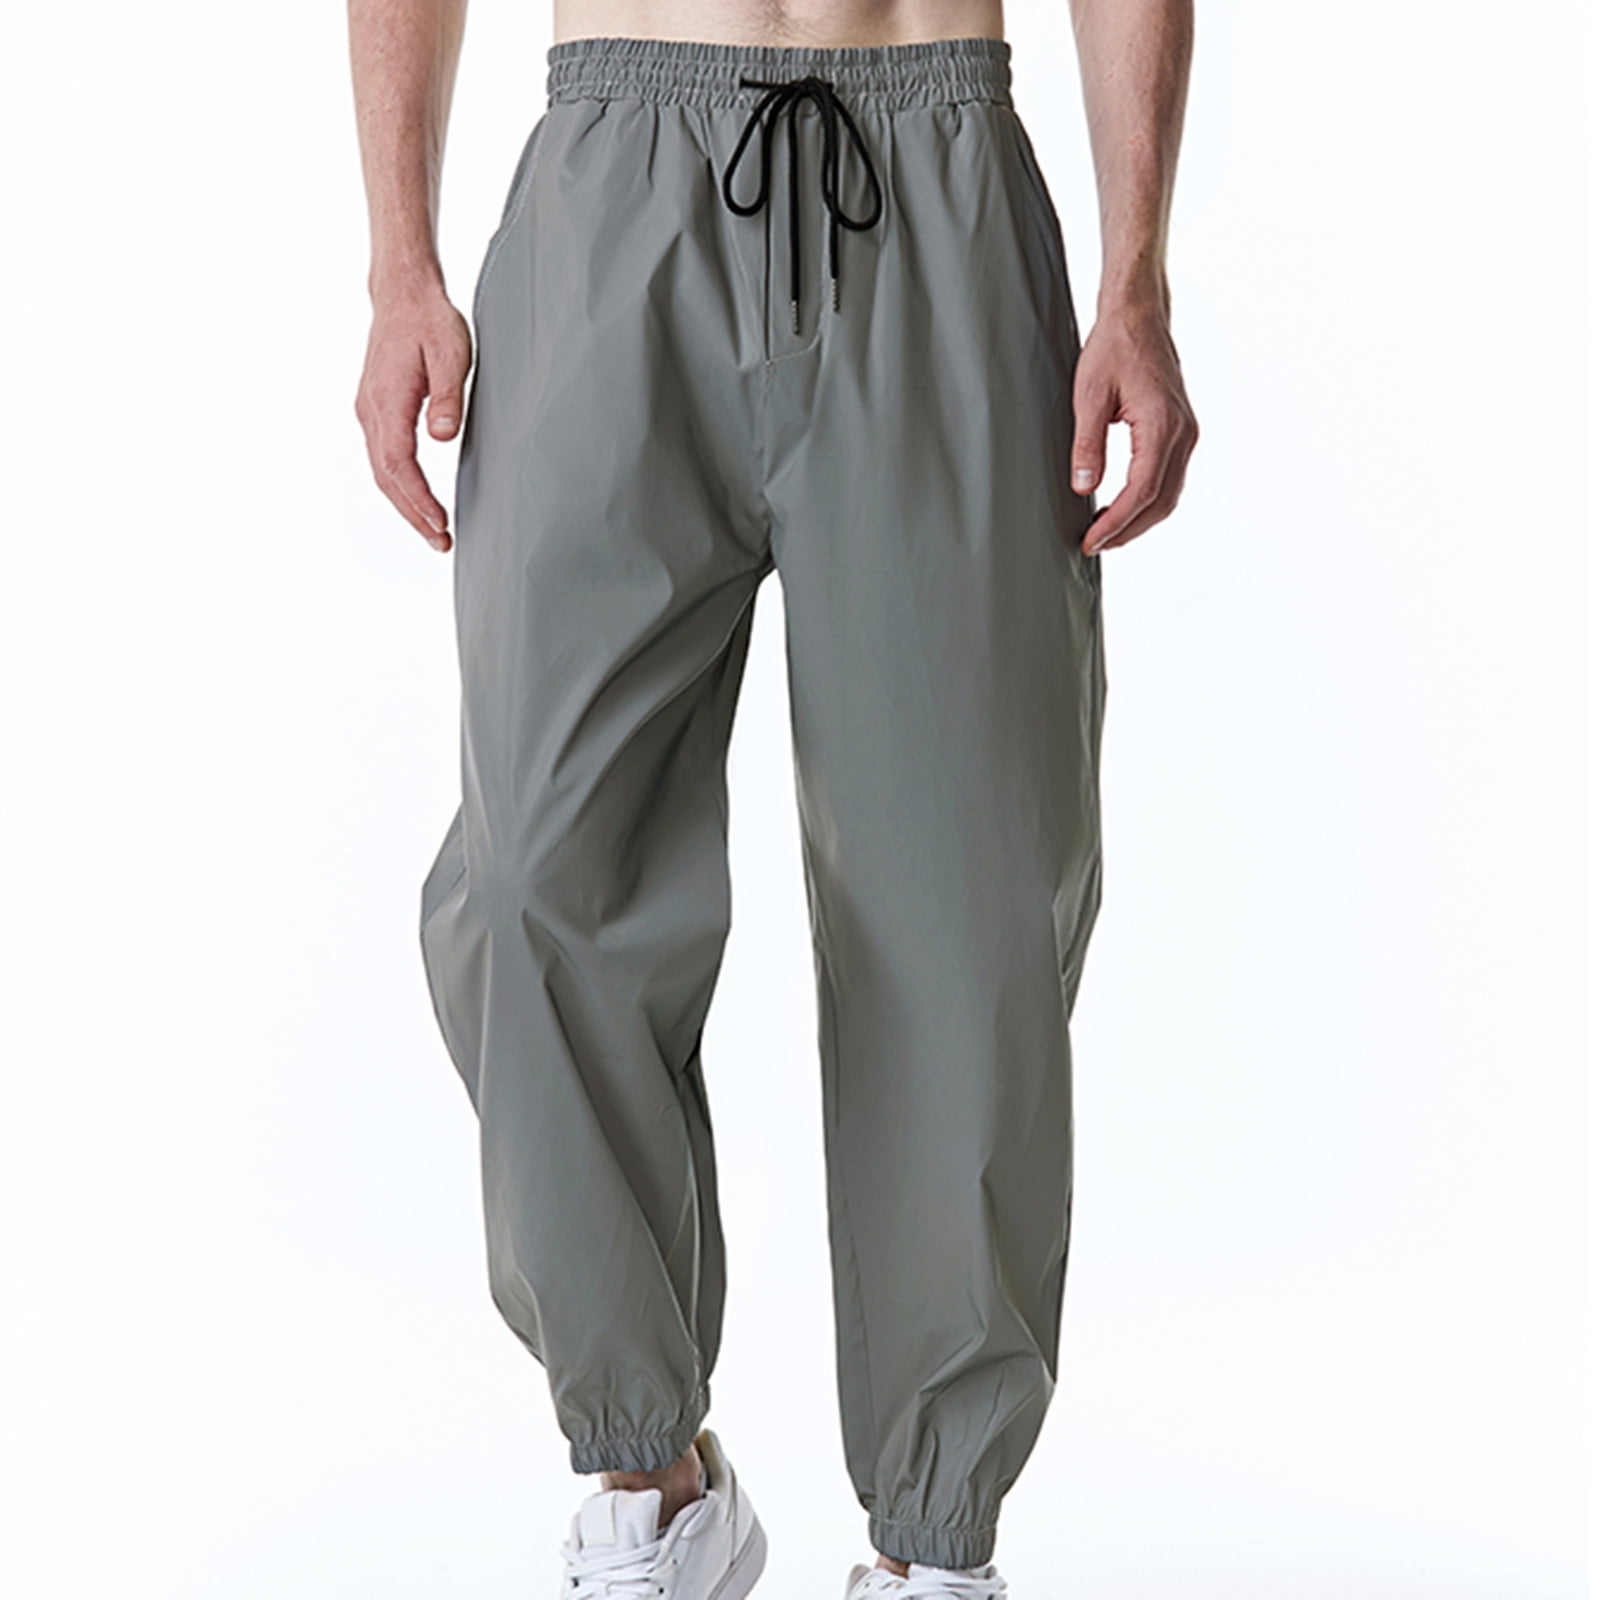 Zodggu Mens Cargo Pants Solid Color Soft Lace Up Elastic